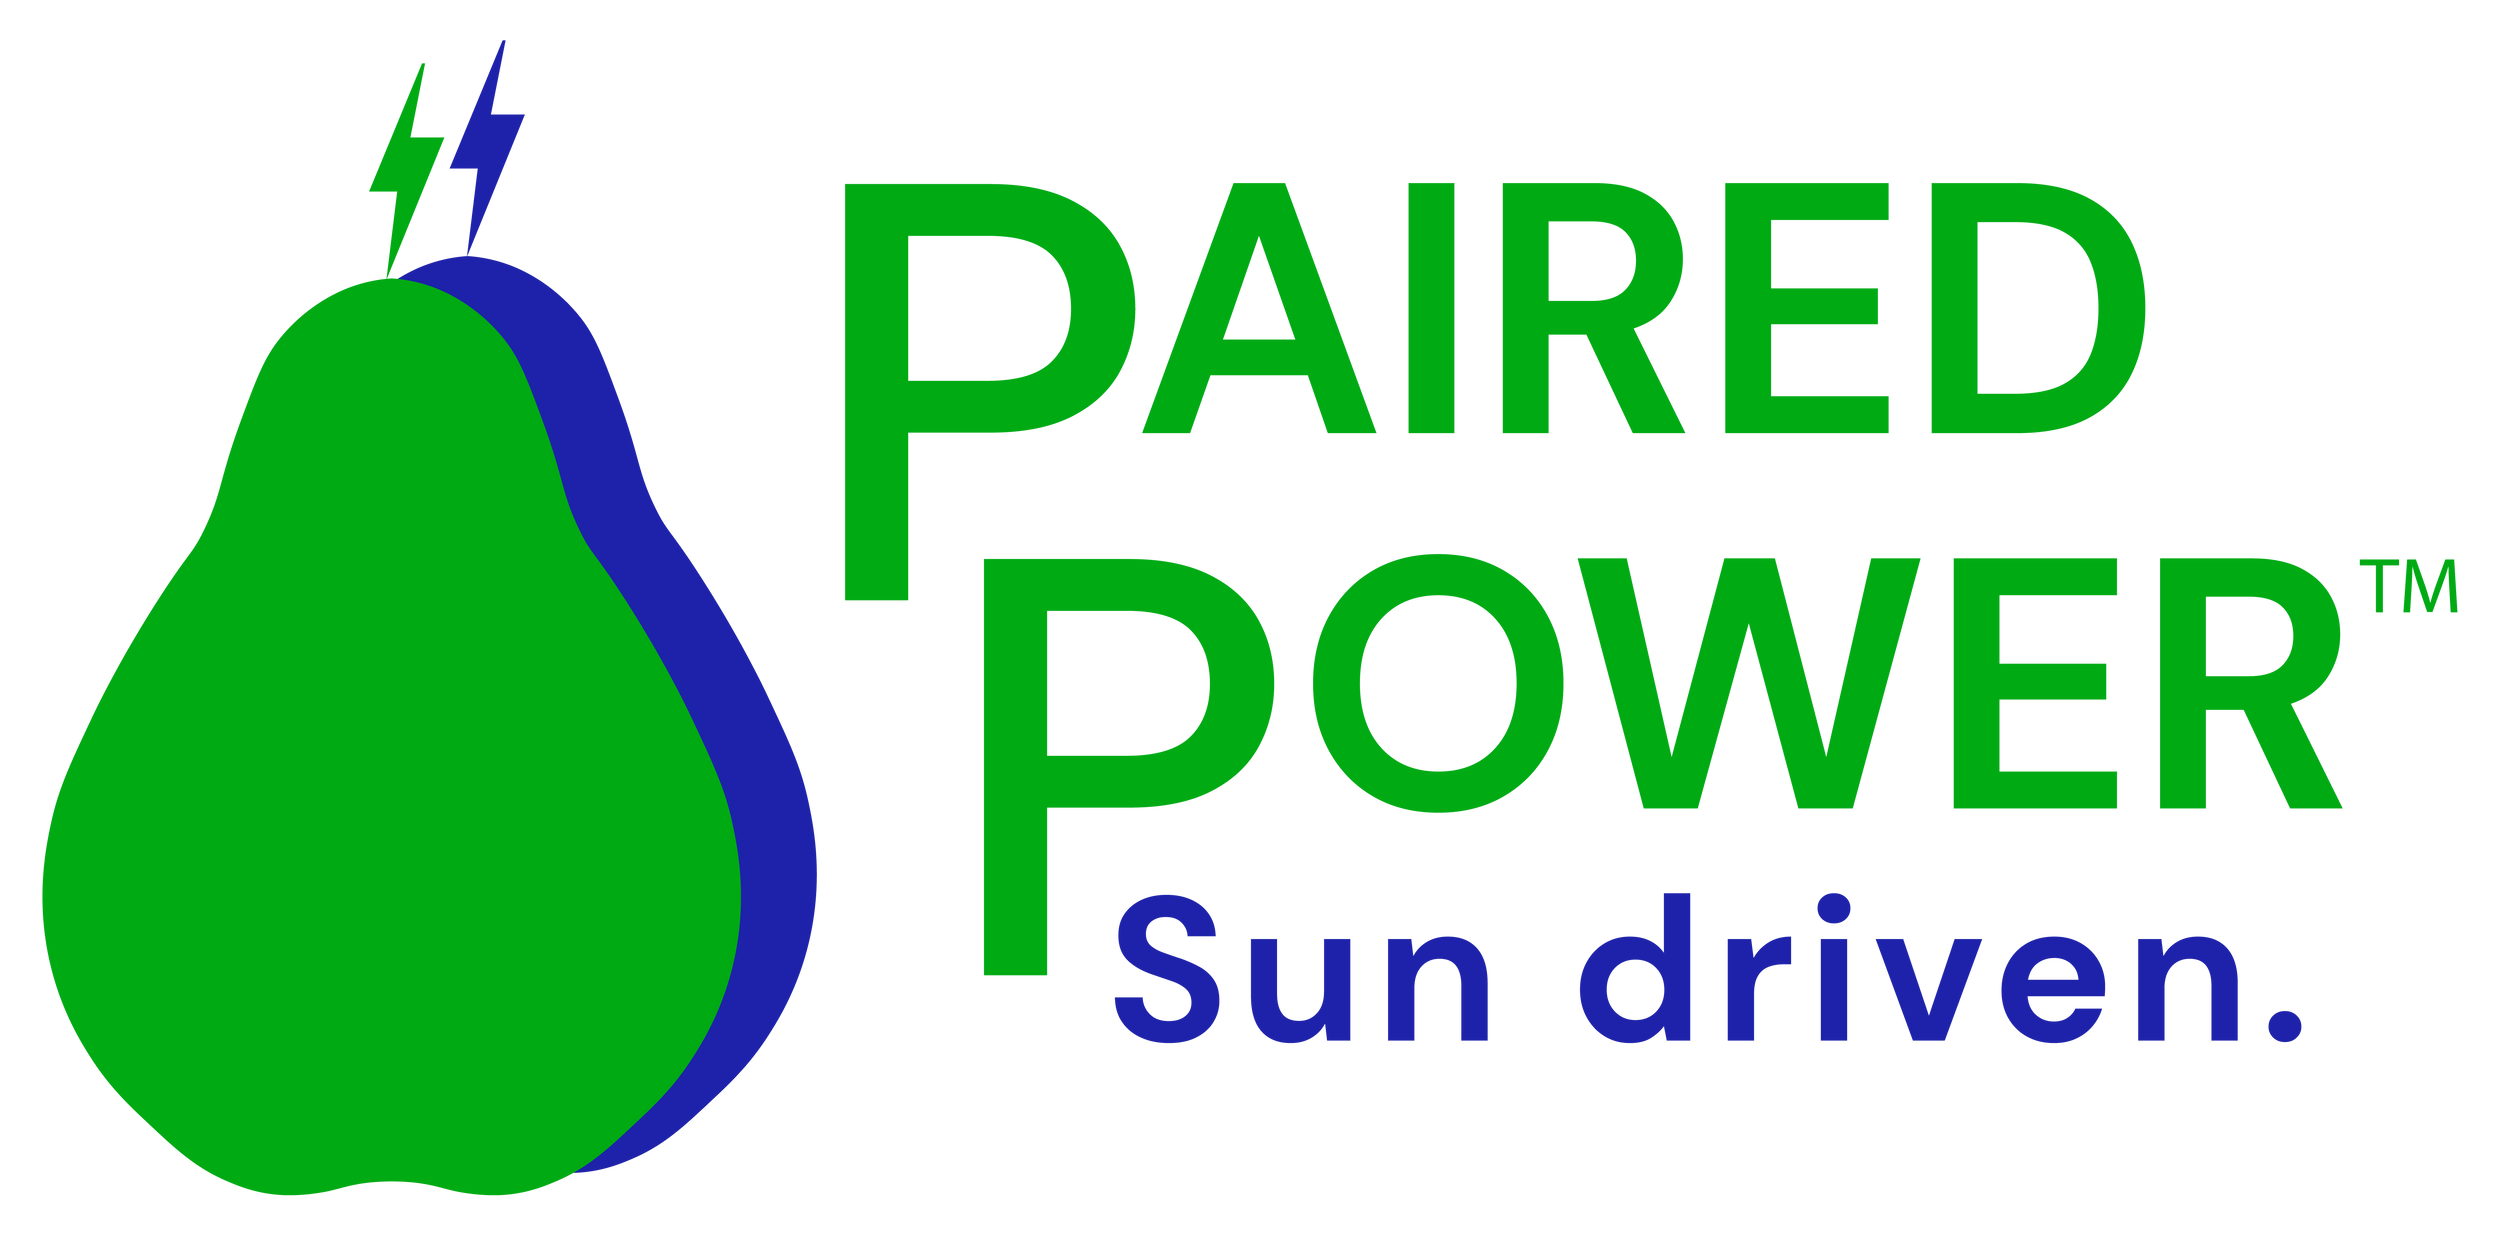 www.pairedpower.com